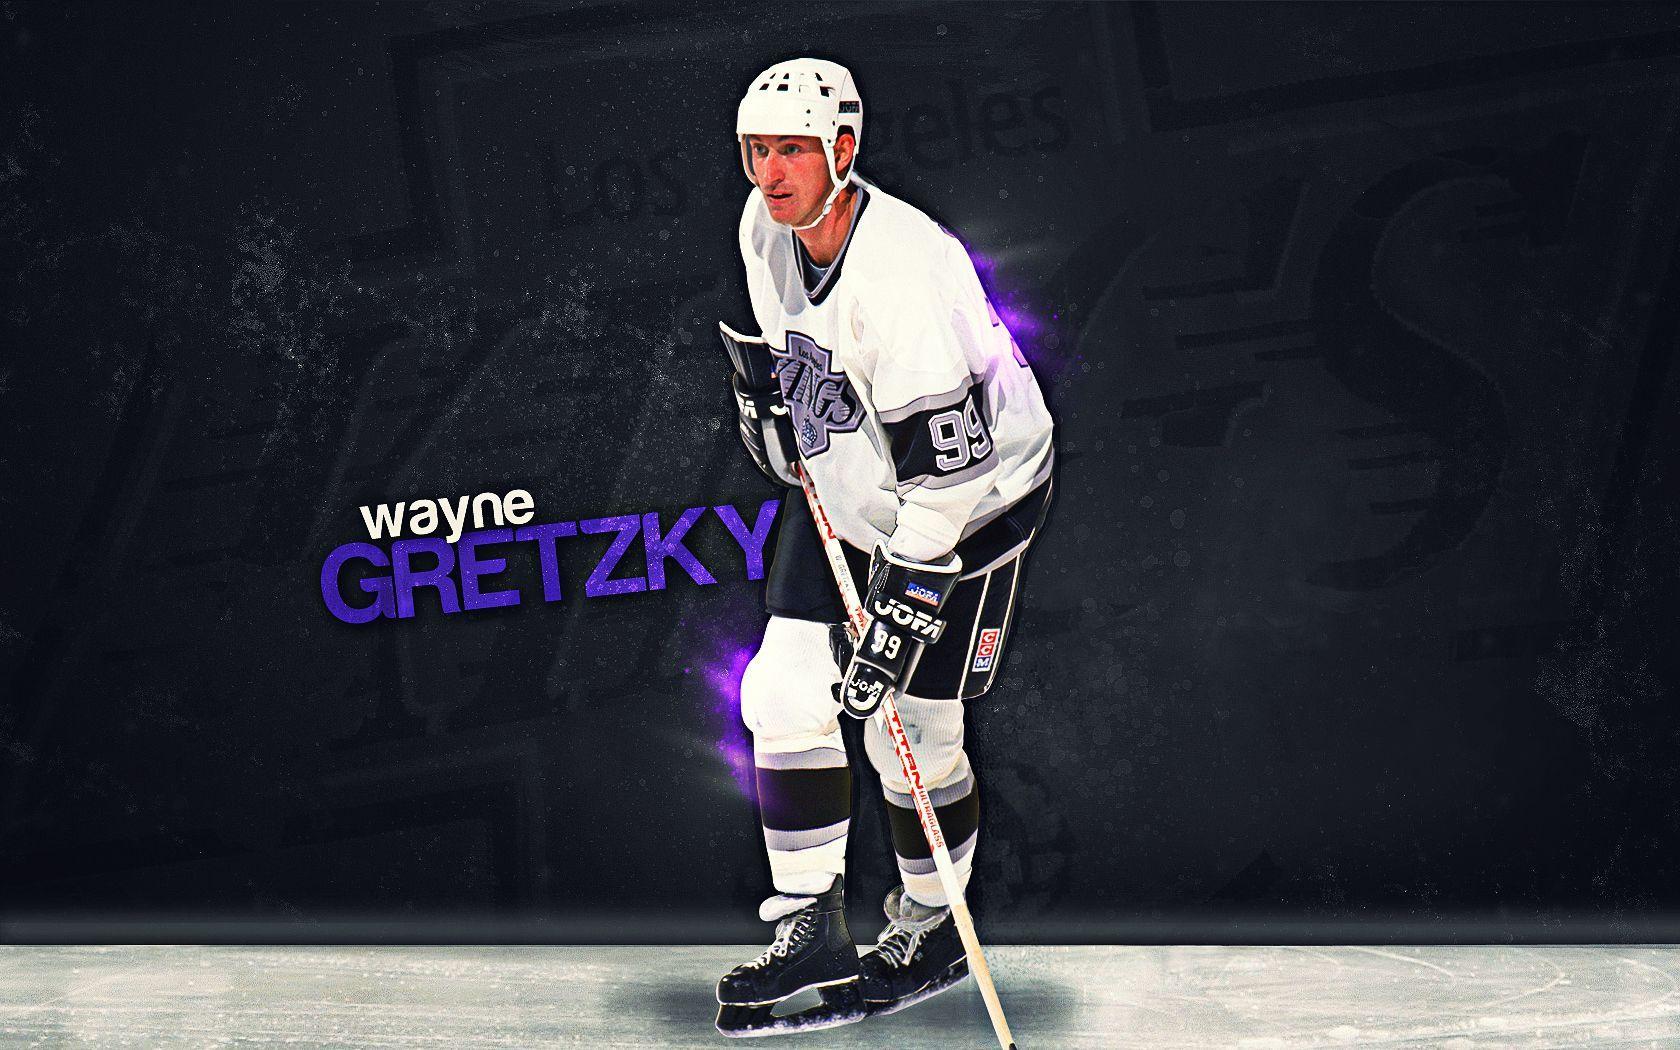 Wayne Gretzky 99 wallpaper by Wezzaman15 - Download on ZEDGE™